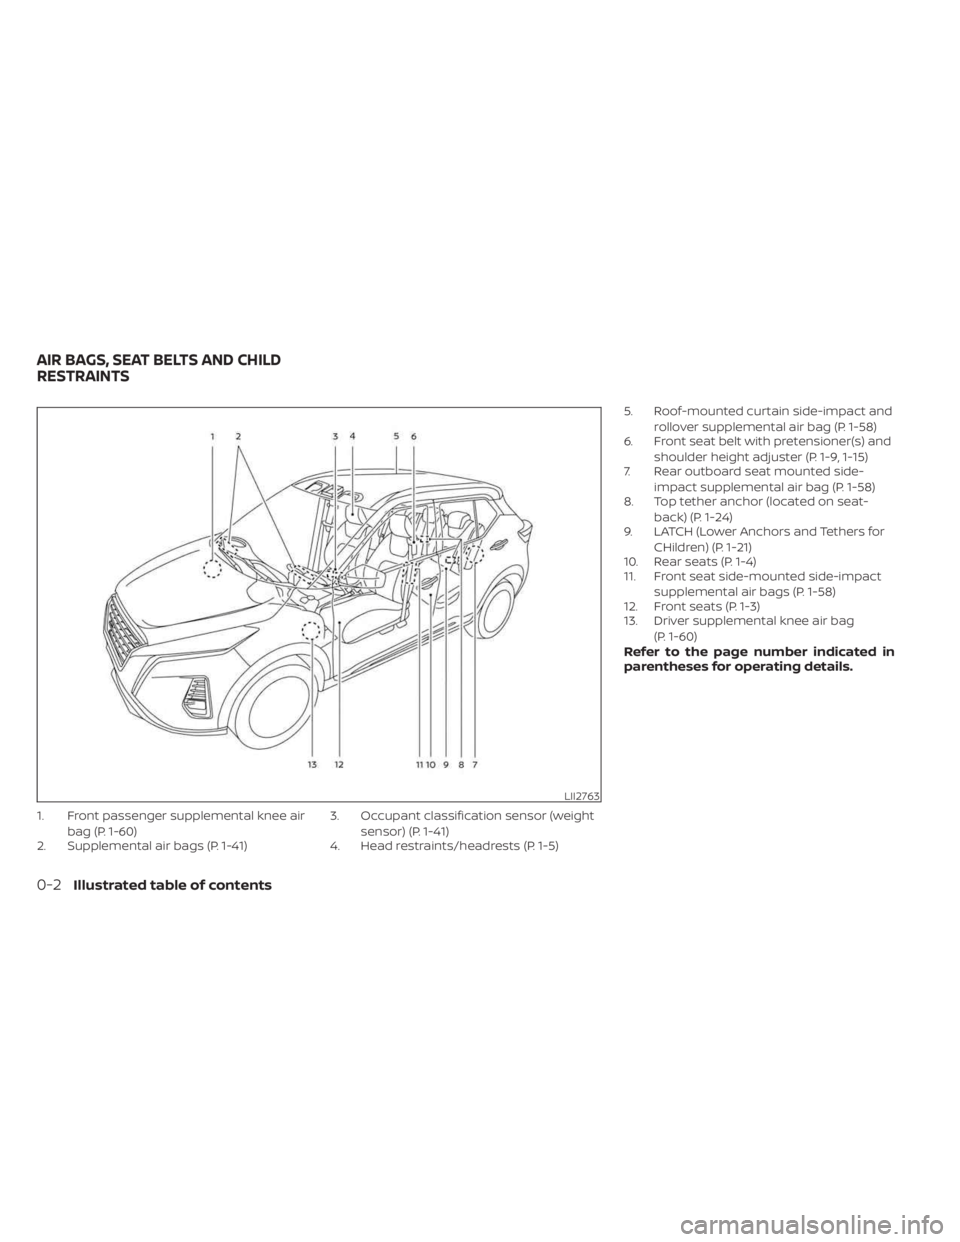 NISSAN KICKS 2023  Owners Manual 1. Front passenger supplemental knee airbag (P. 1-60)
2. Supplemental air bags (P. 1-41) 3. Occupant classification sensor (weight
sensor) (P. 1-41)
4. Head restraints/headrests (P. 1-5) 5. Roof-mount